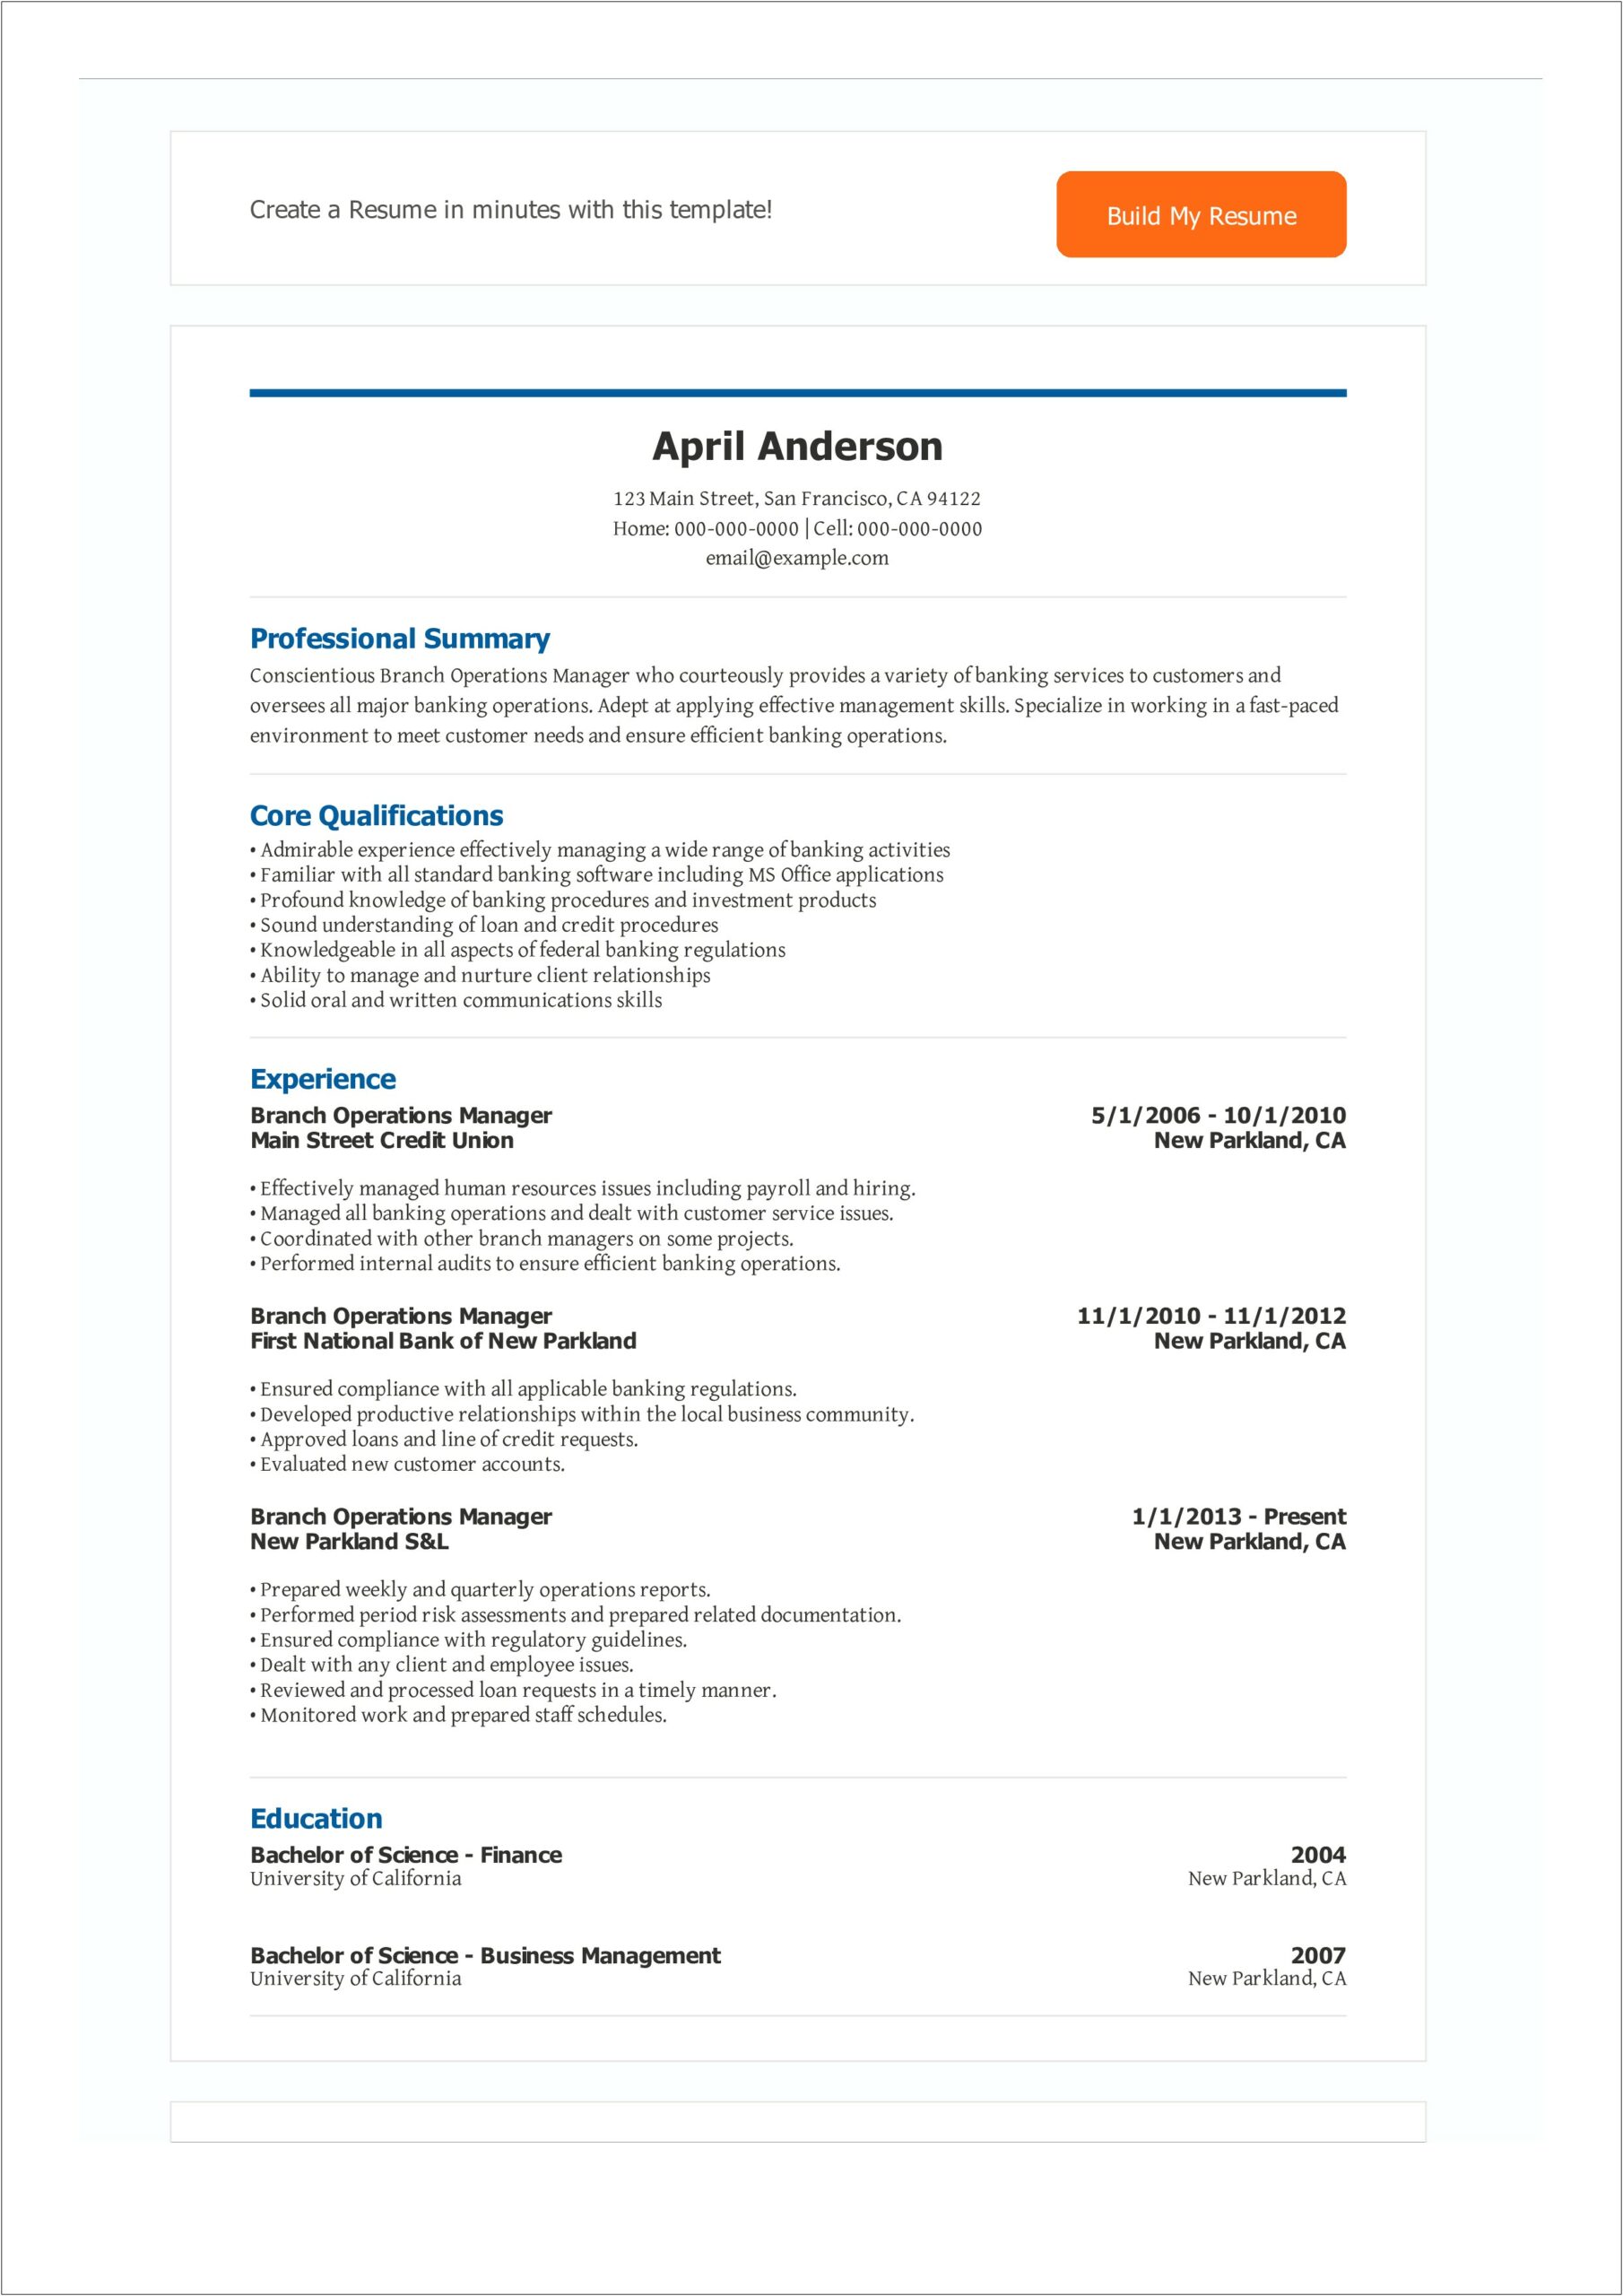 Latest Resume Format 2012 Sample Download